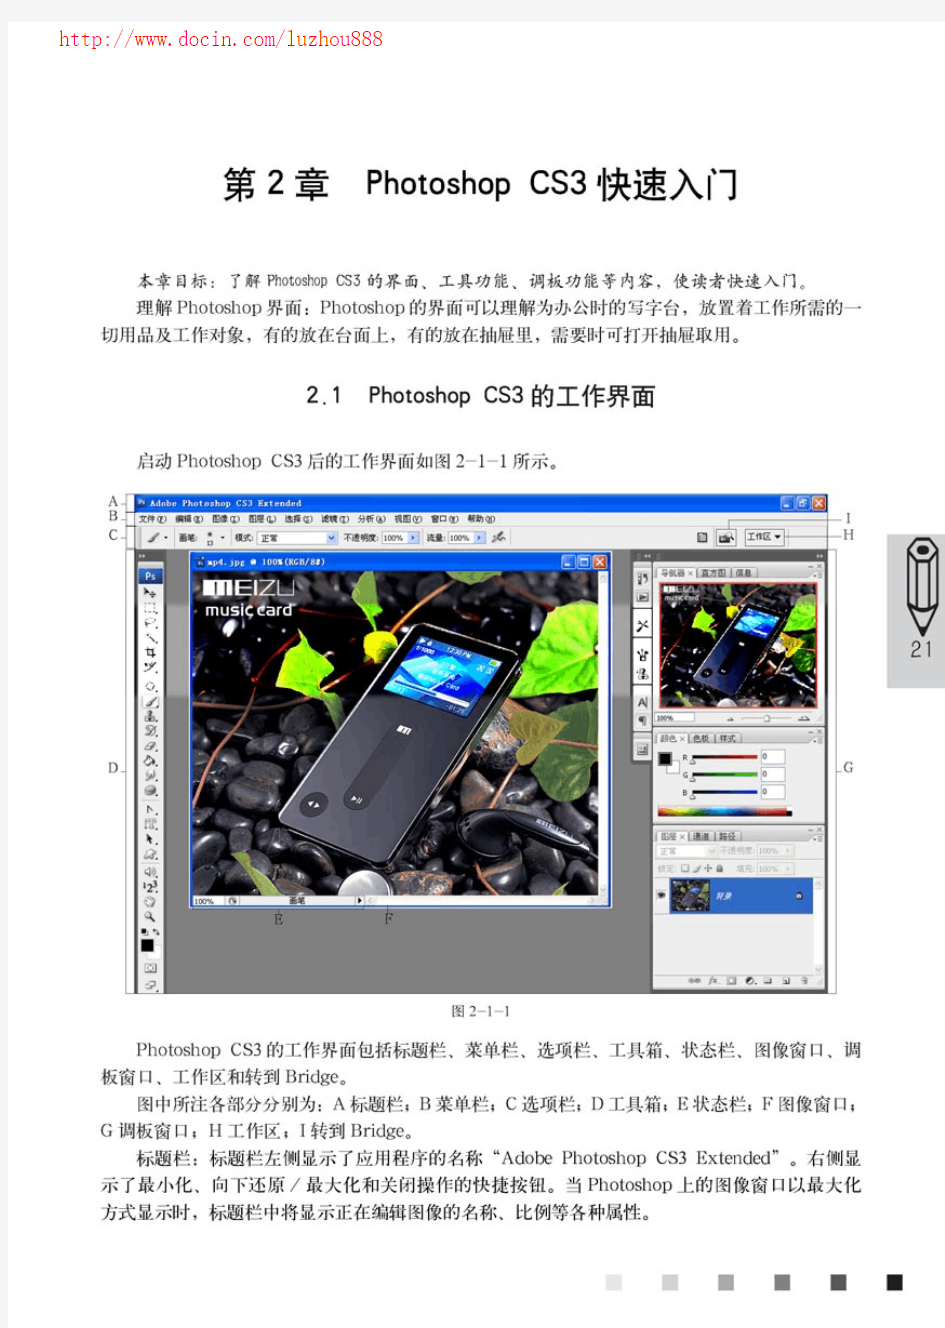 photoshop CS3中文版教程之一快速入门